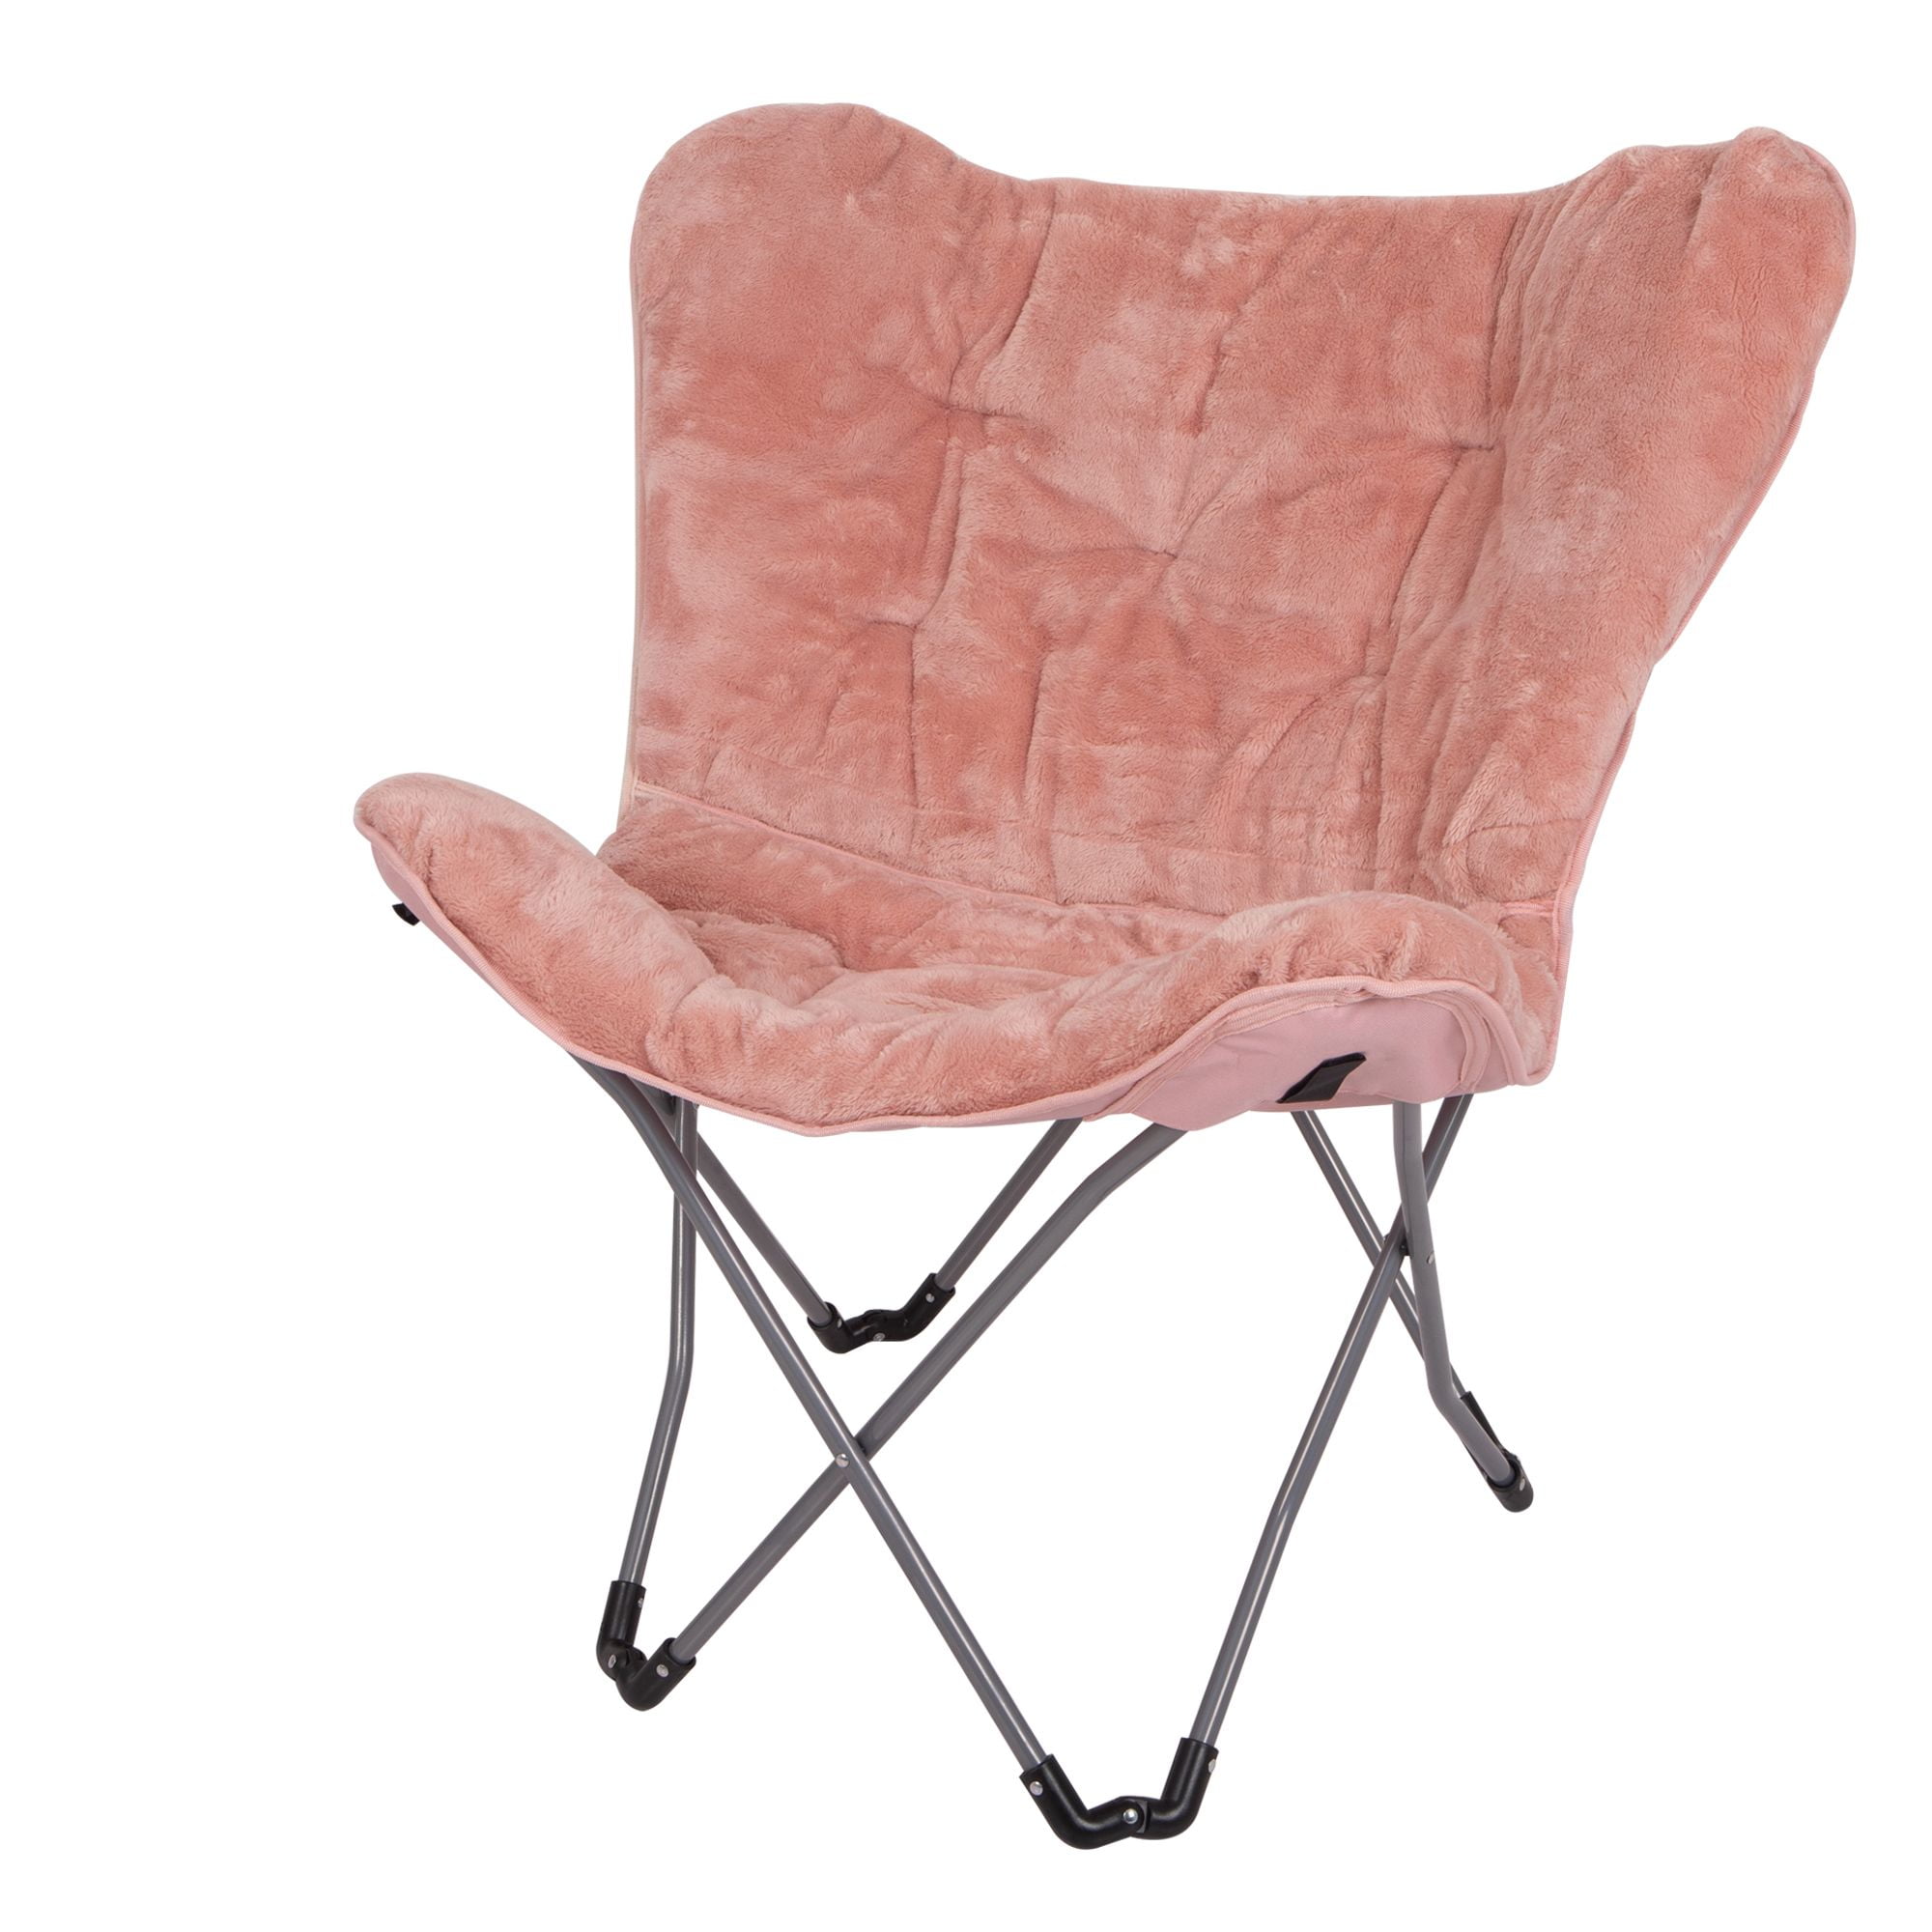 New Gorgeous Luxe Velvet Folding Chair Stunning Elegant Look Easy to Store & Foldable Blush